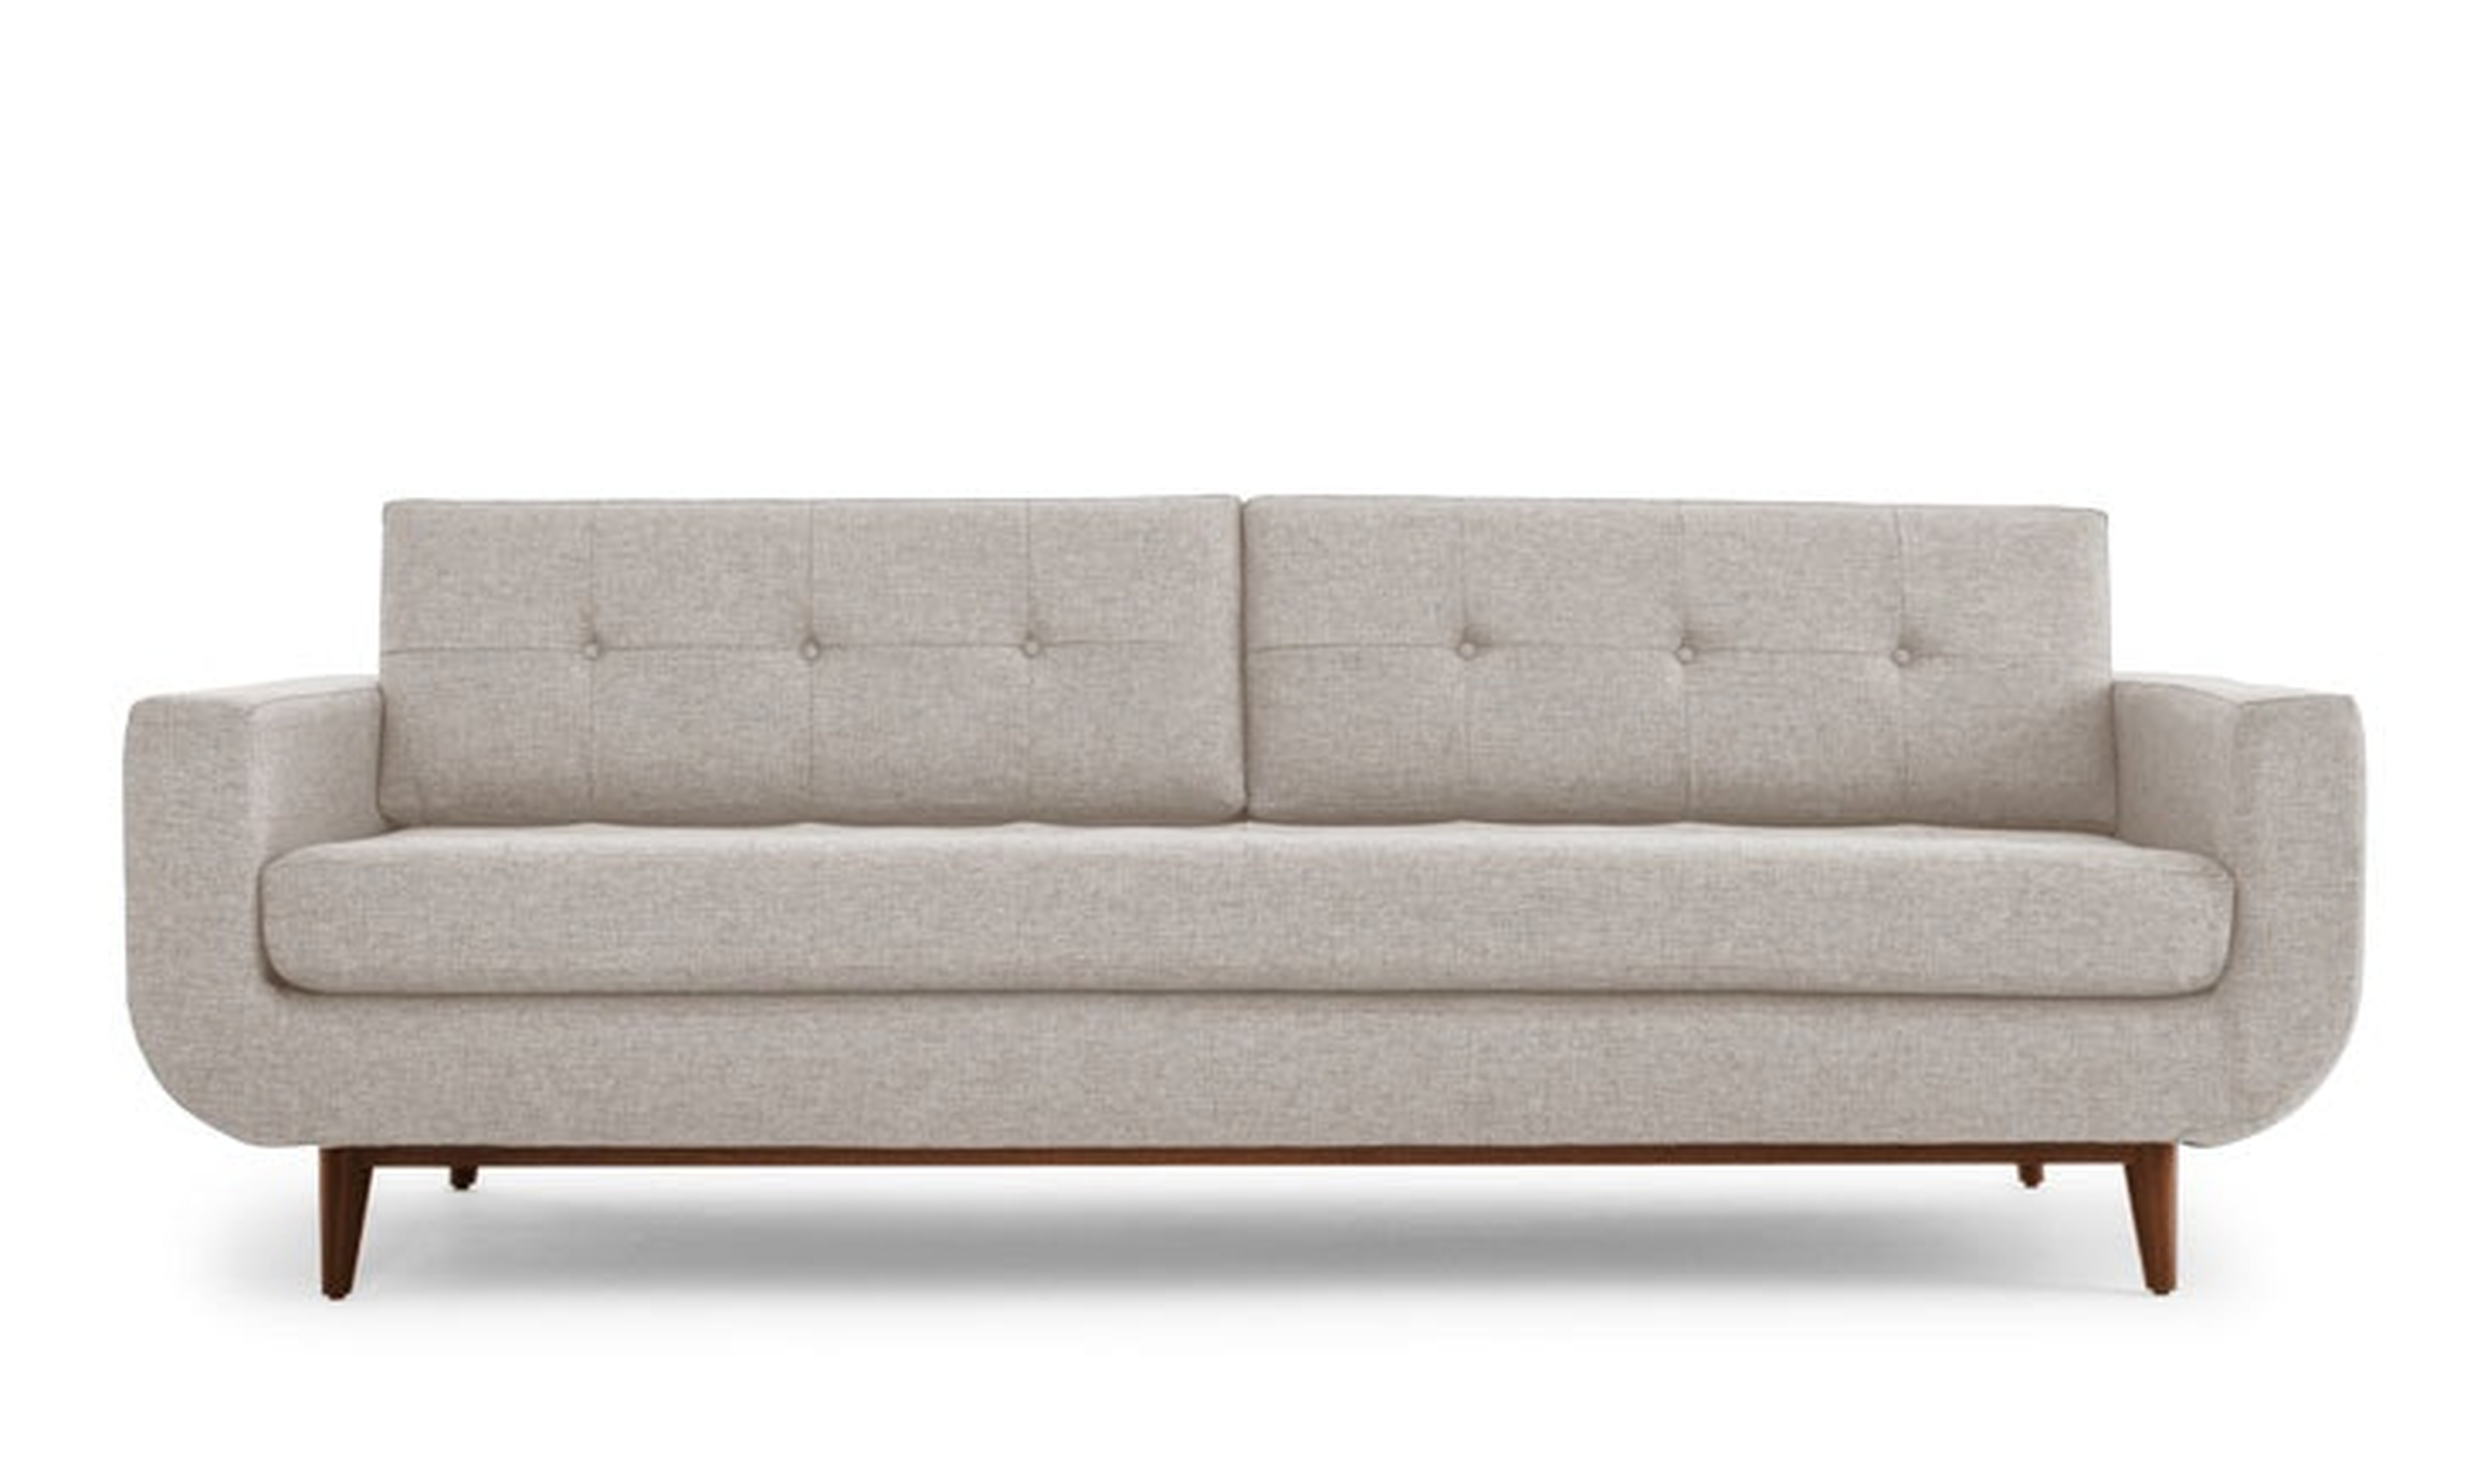 Midcentury Modern Sofa Gervin - Merit Dove - Medium - Beige - Joybird